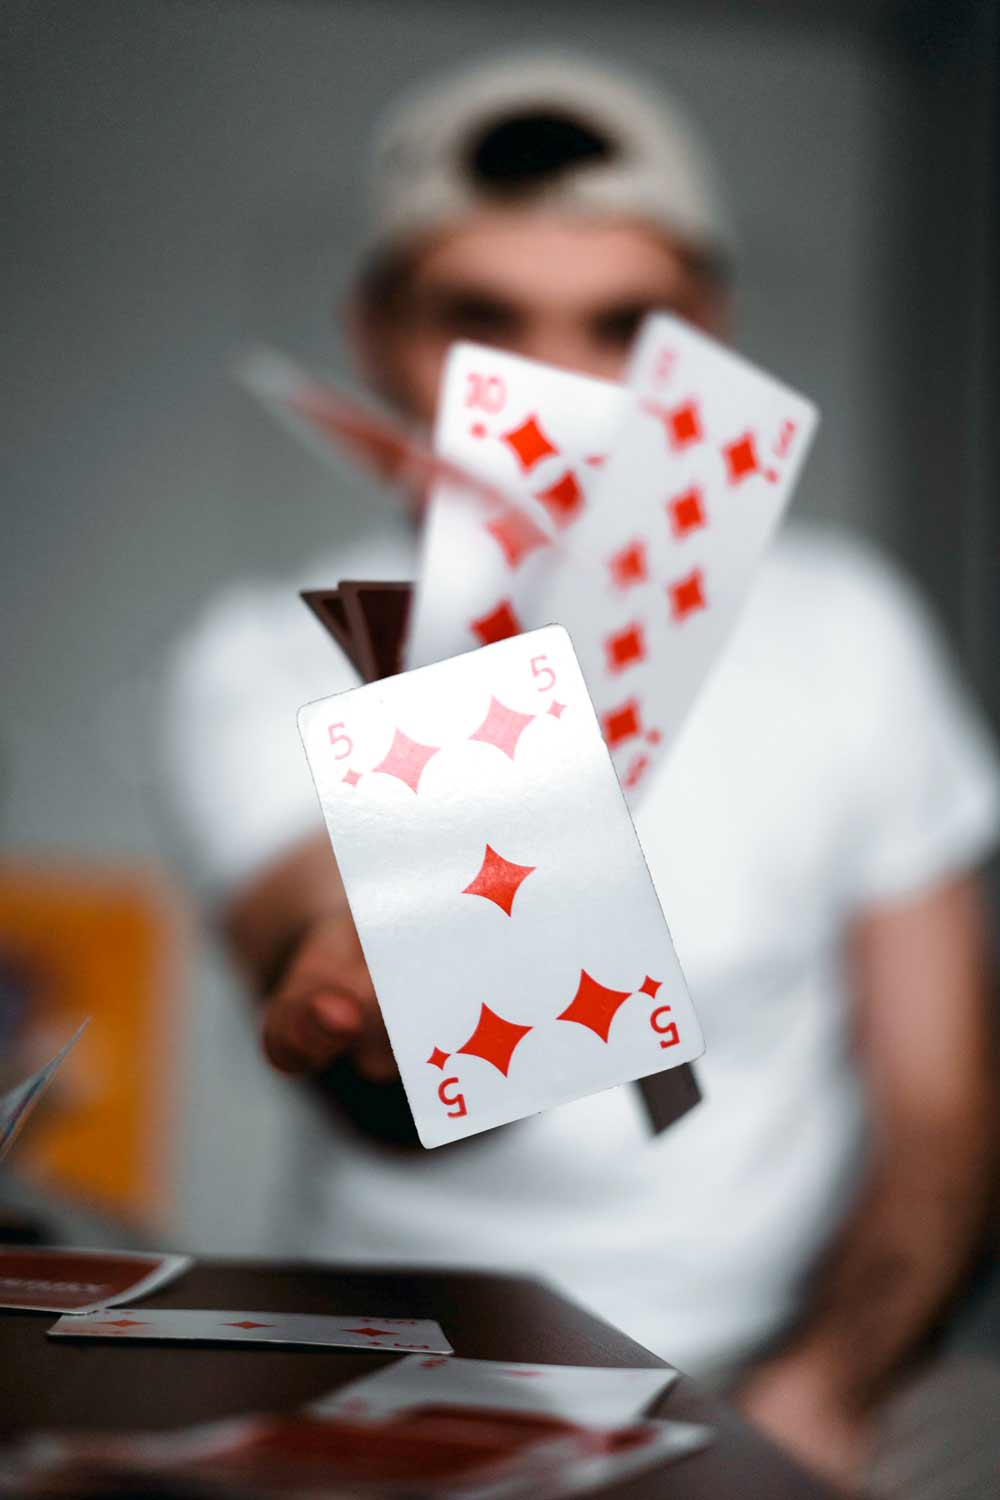 Magician flipping cards towards camera